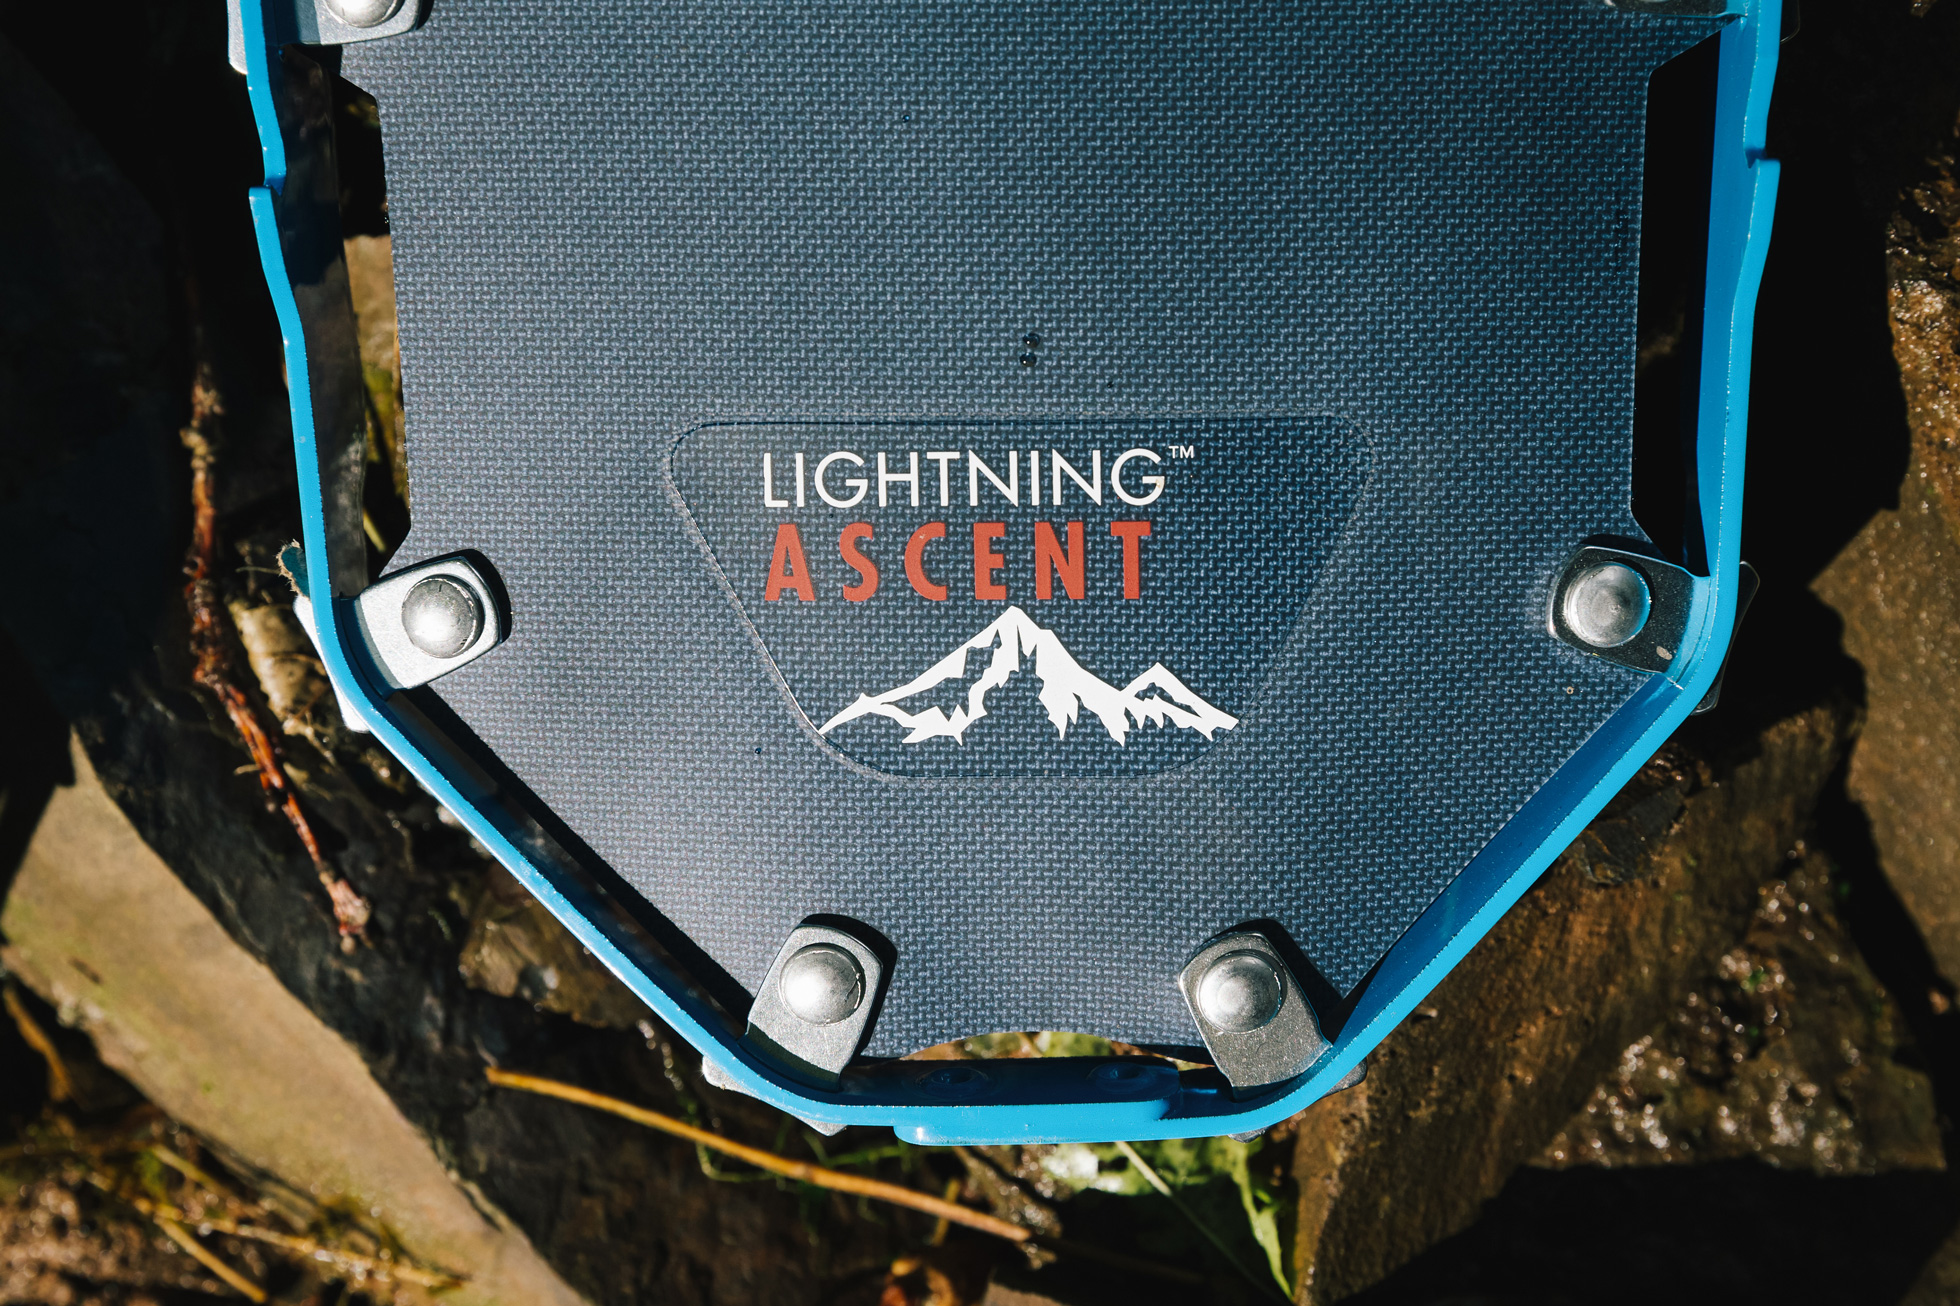 MSR Lightning Ascent Snowshoes review